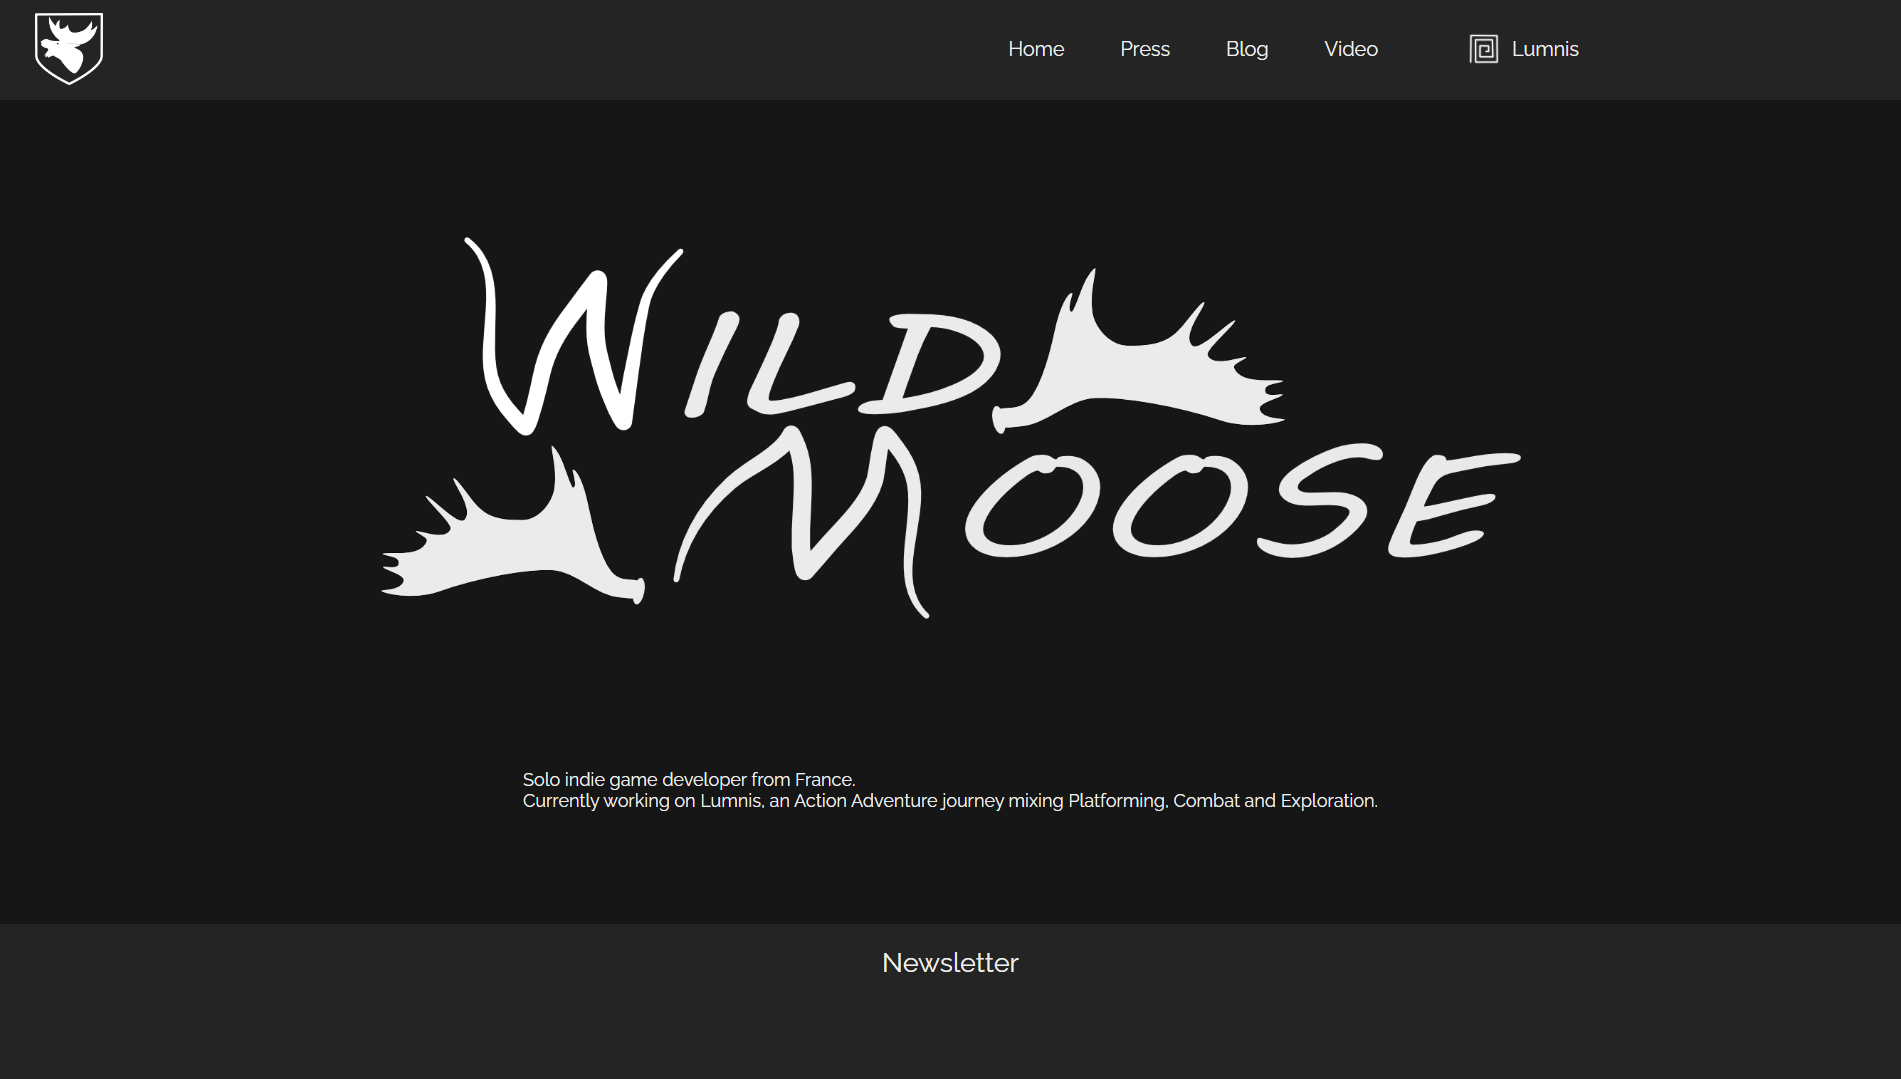 wise moose games website image